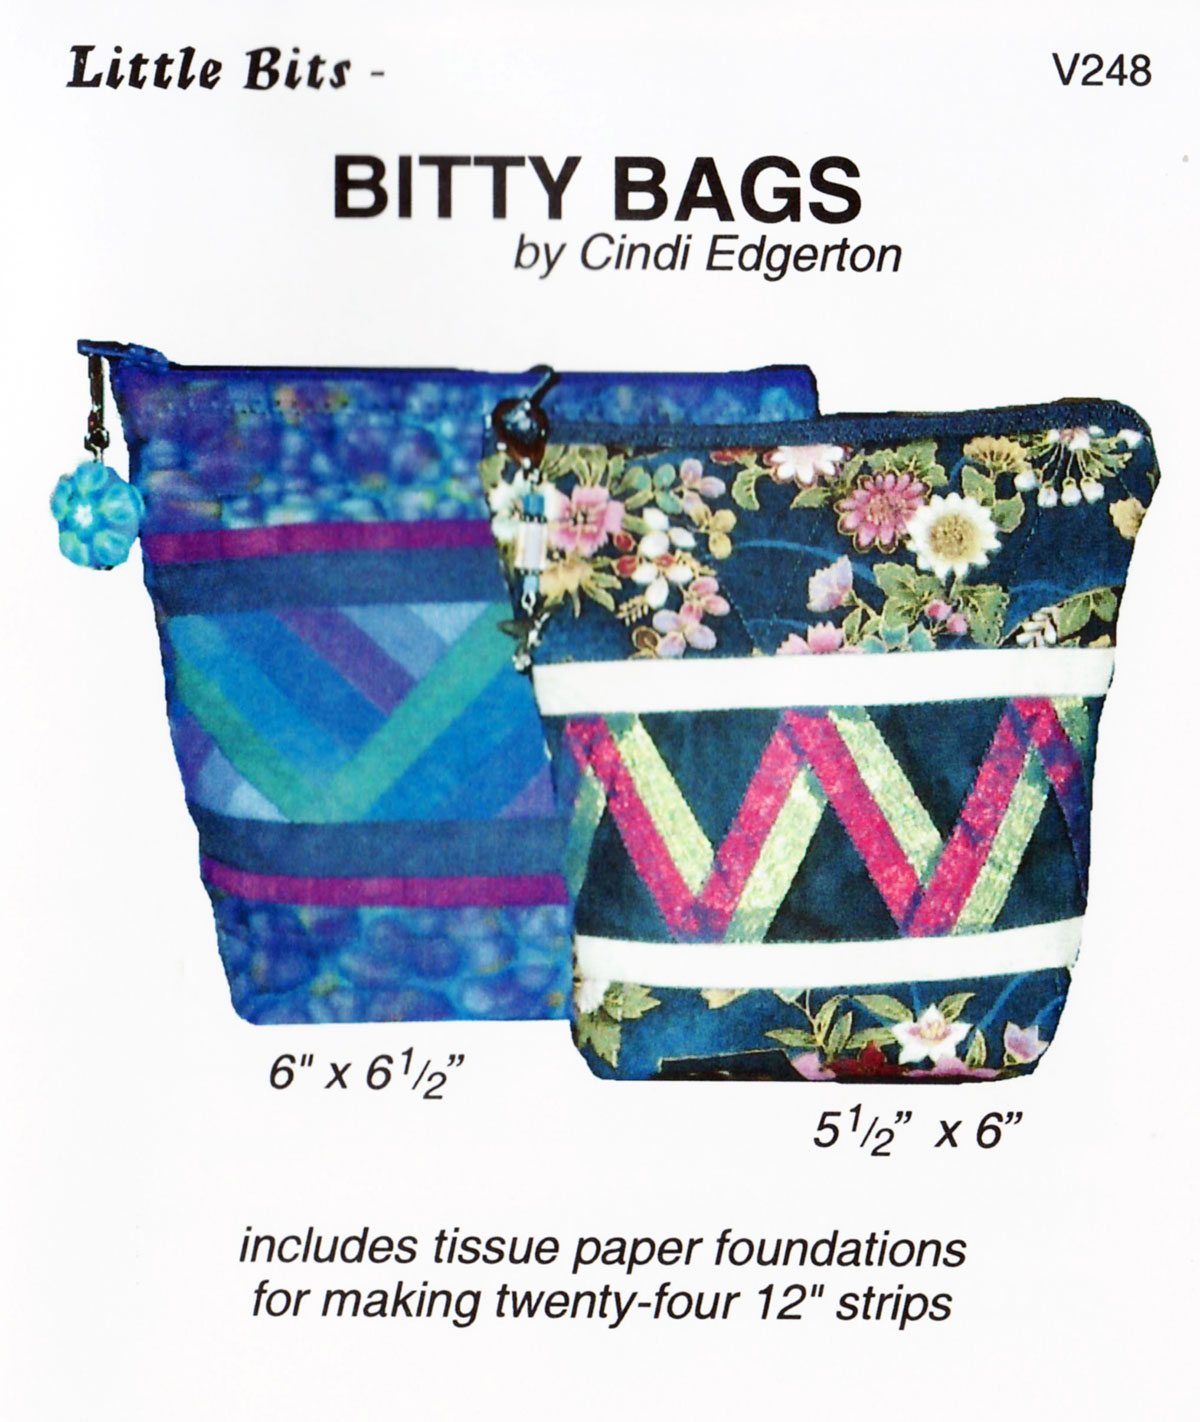 Little-Bits-Bitty-Bags-sewing-pattern-Cindi-Edgerton-front